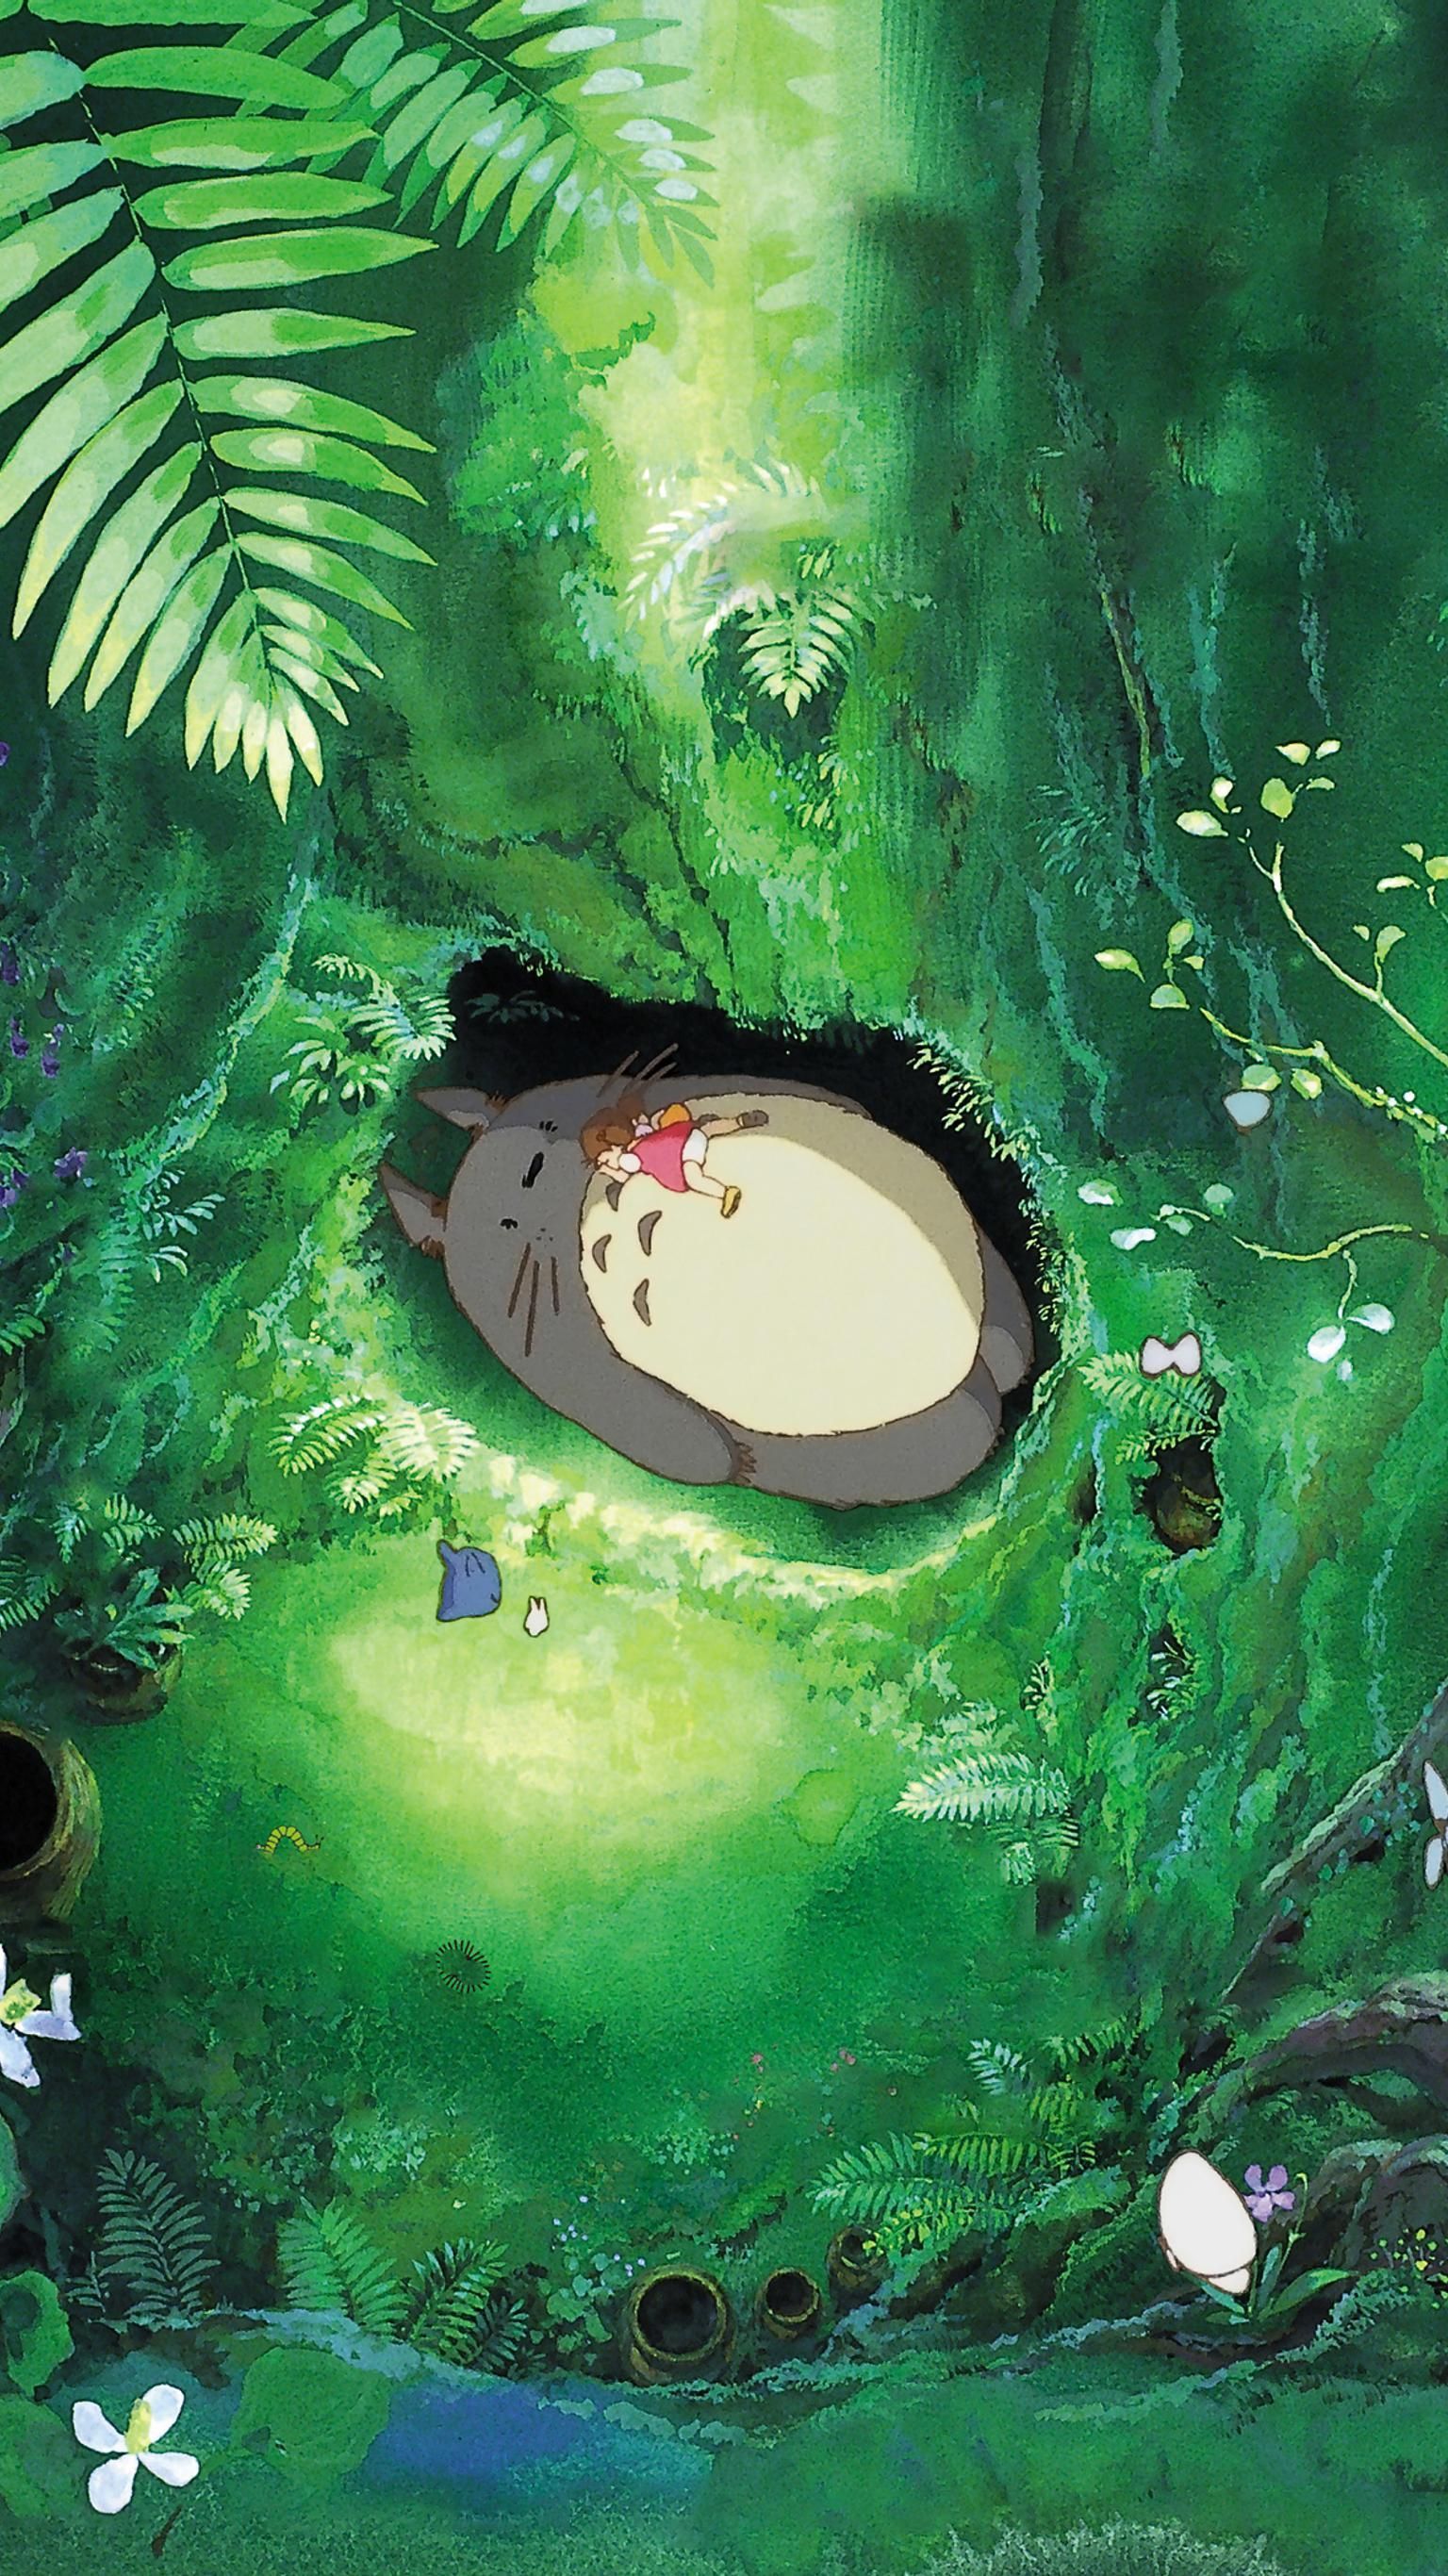 My Neighbor Totoro (1988) Phone Wallpaper. Moviemania. Studio ghibli background, Studio ghibli poster, Ghibli artwork